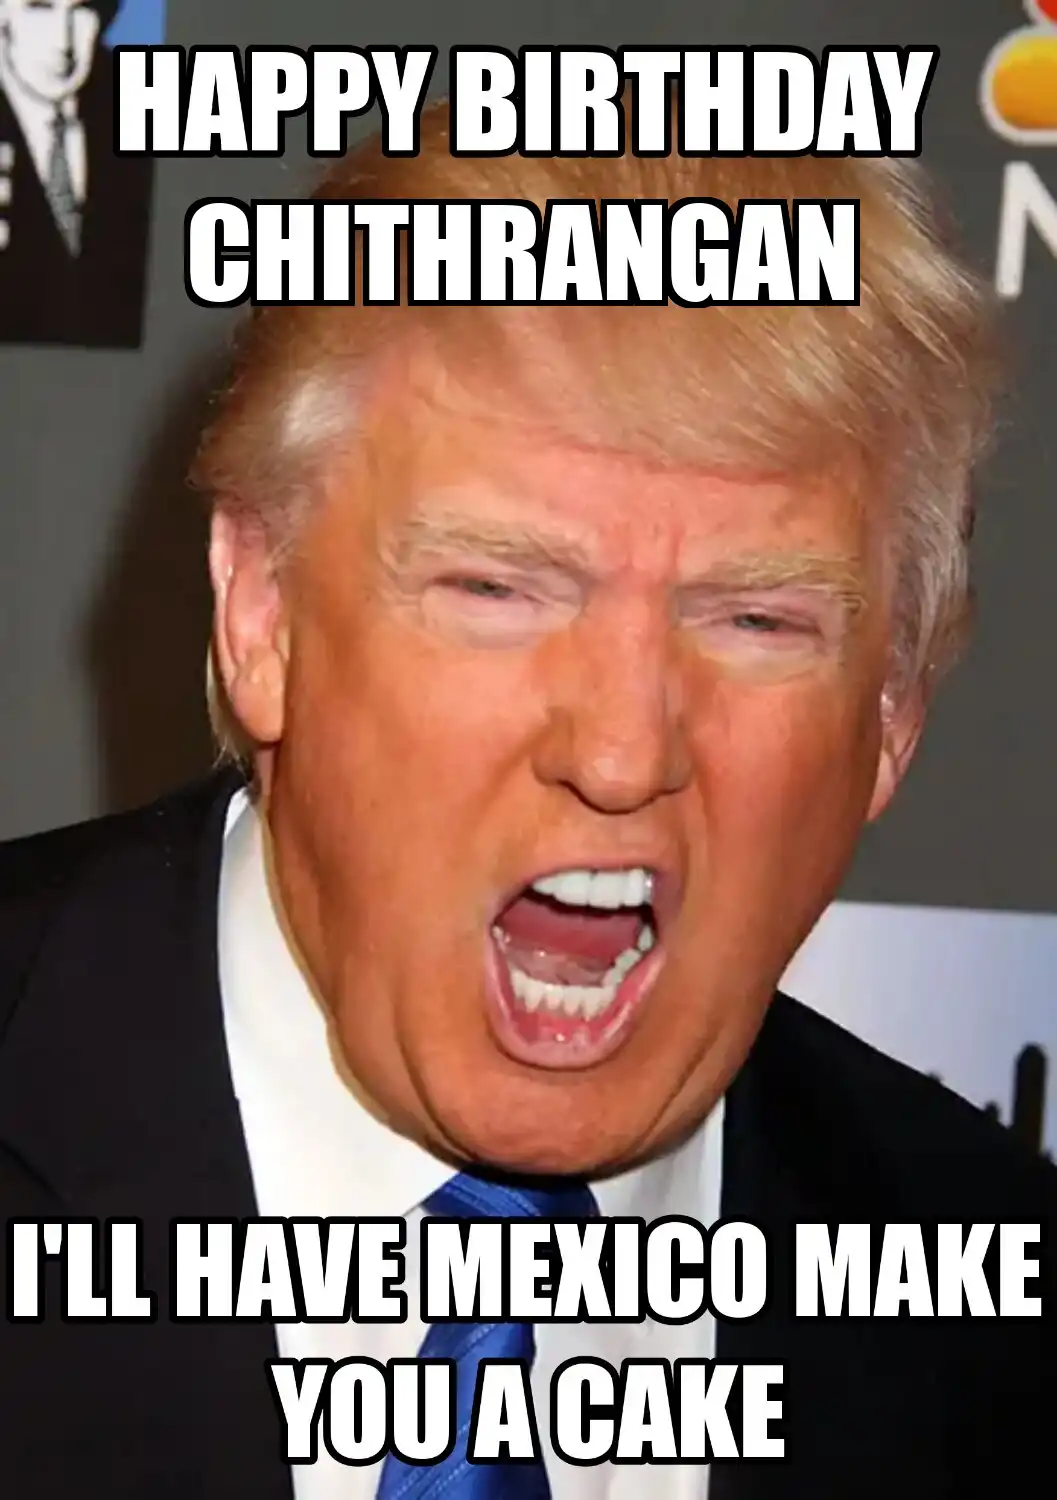 Happy Birthday Chithrangan Mexico Make You A Cake Meme